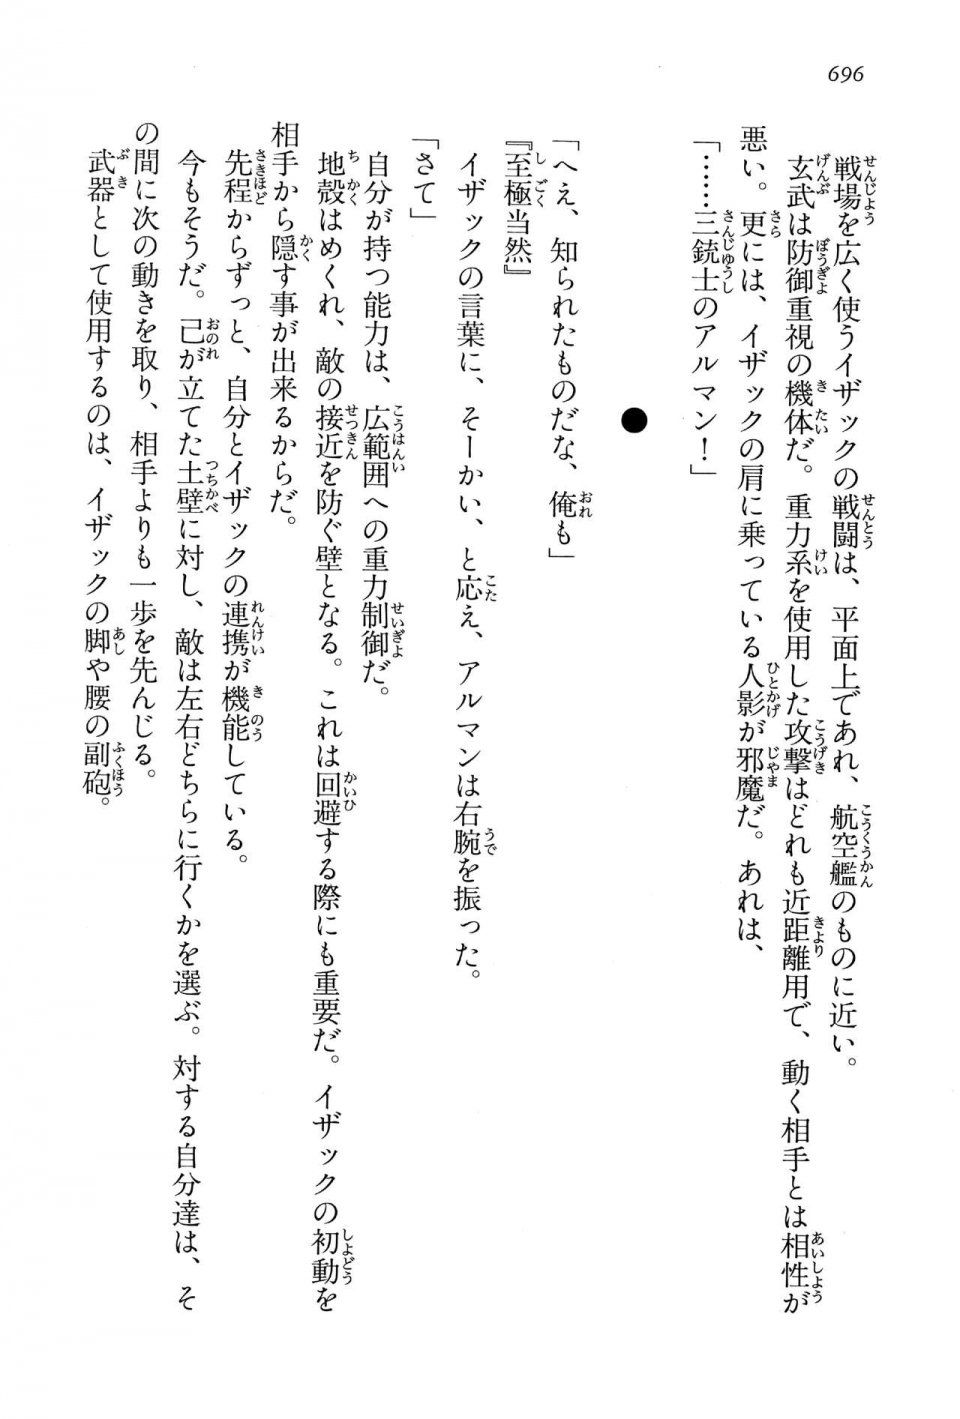 Kyoukai Senjou no Horizon LN Vol 15(6C) Part 2 - Photo #166